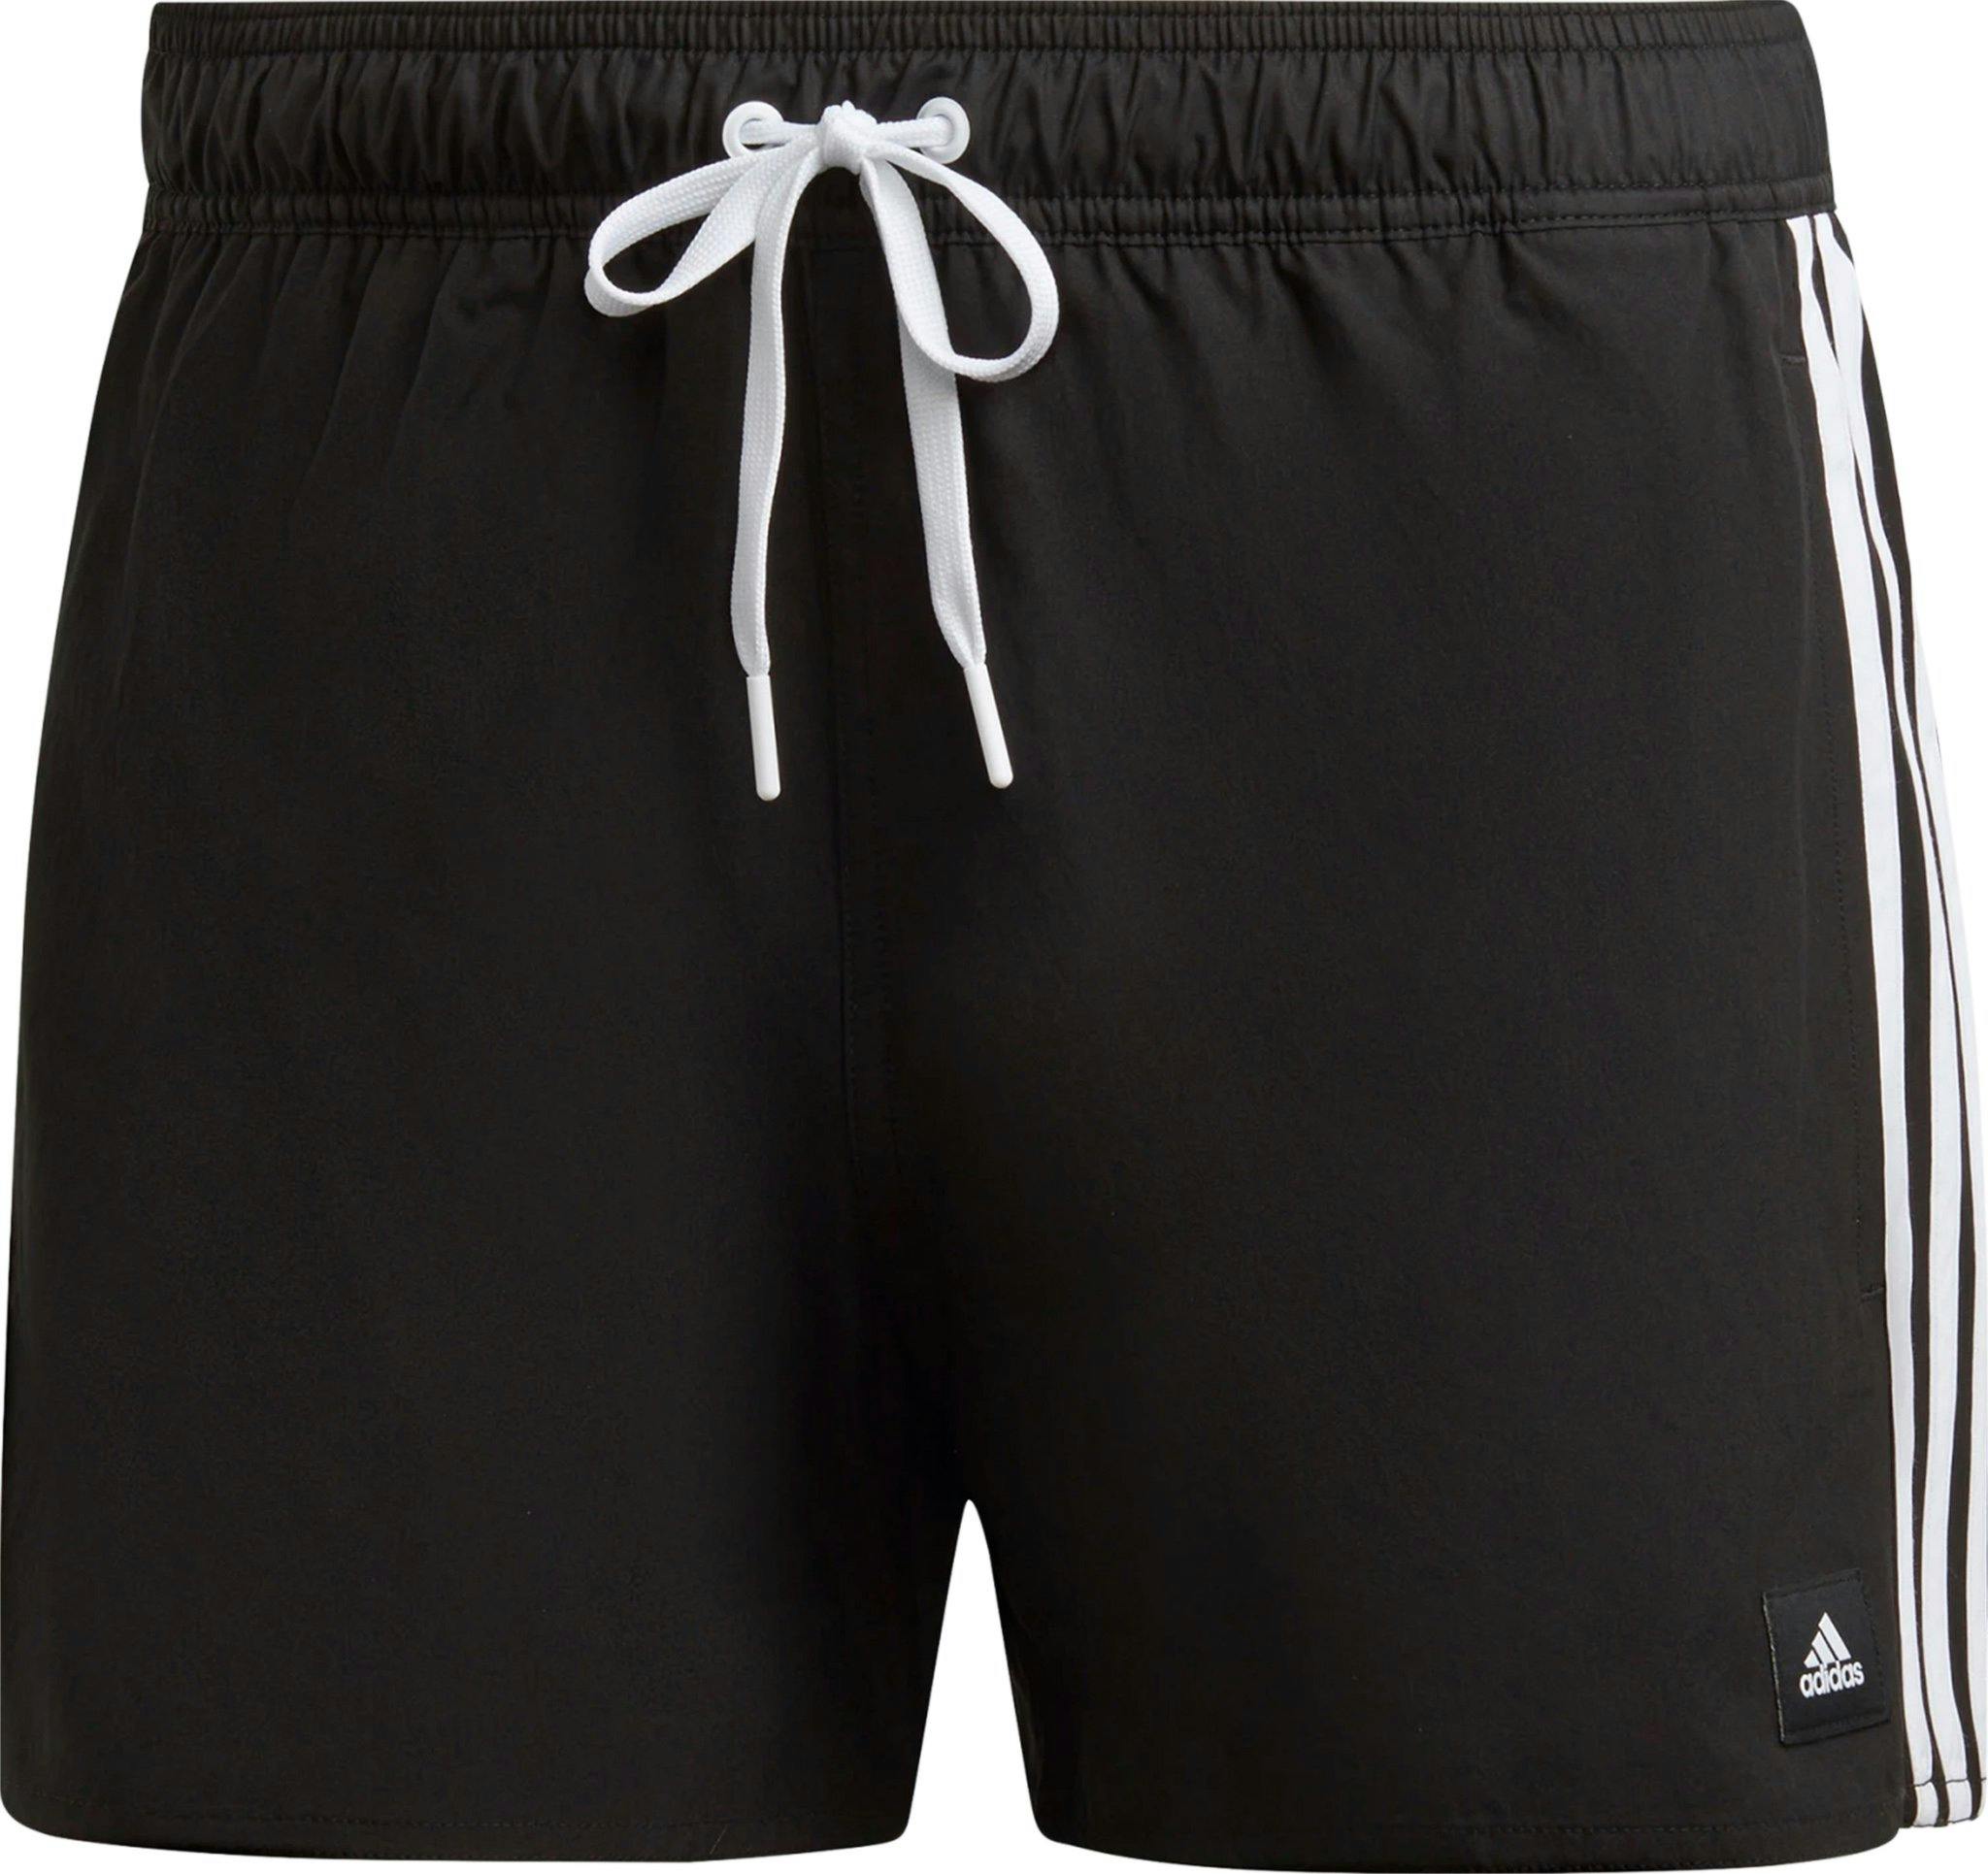 Product image for CLX 3-Stripes Swim Shorts - Men's